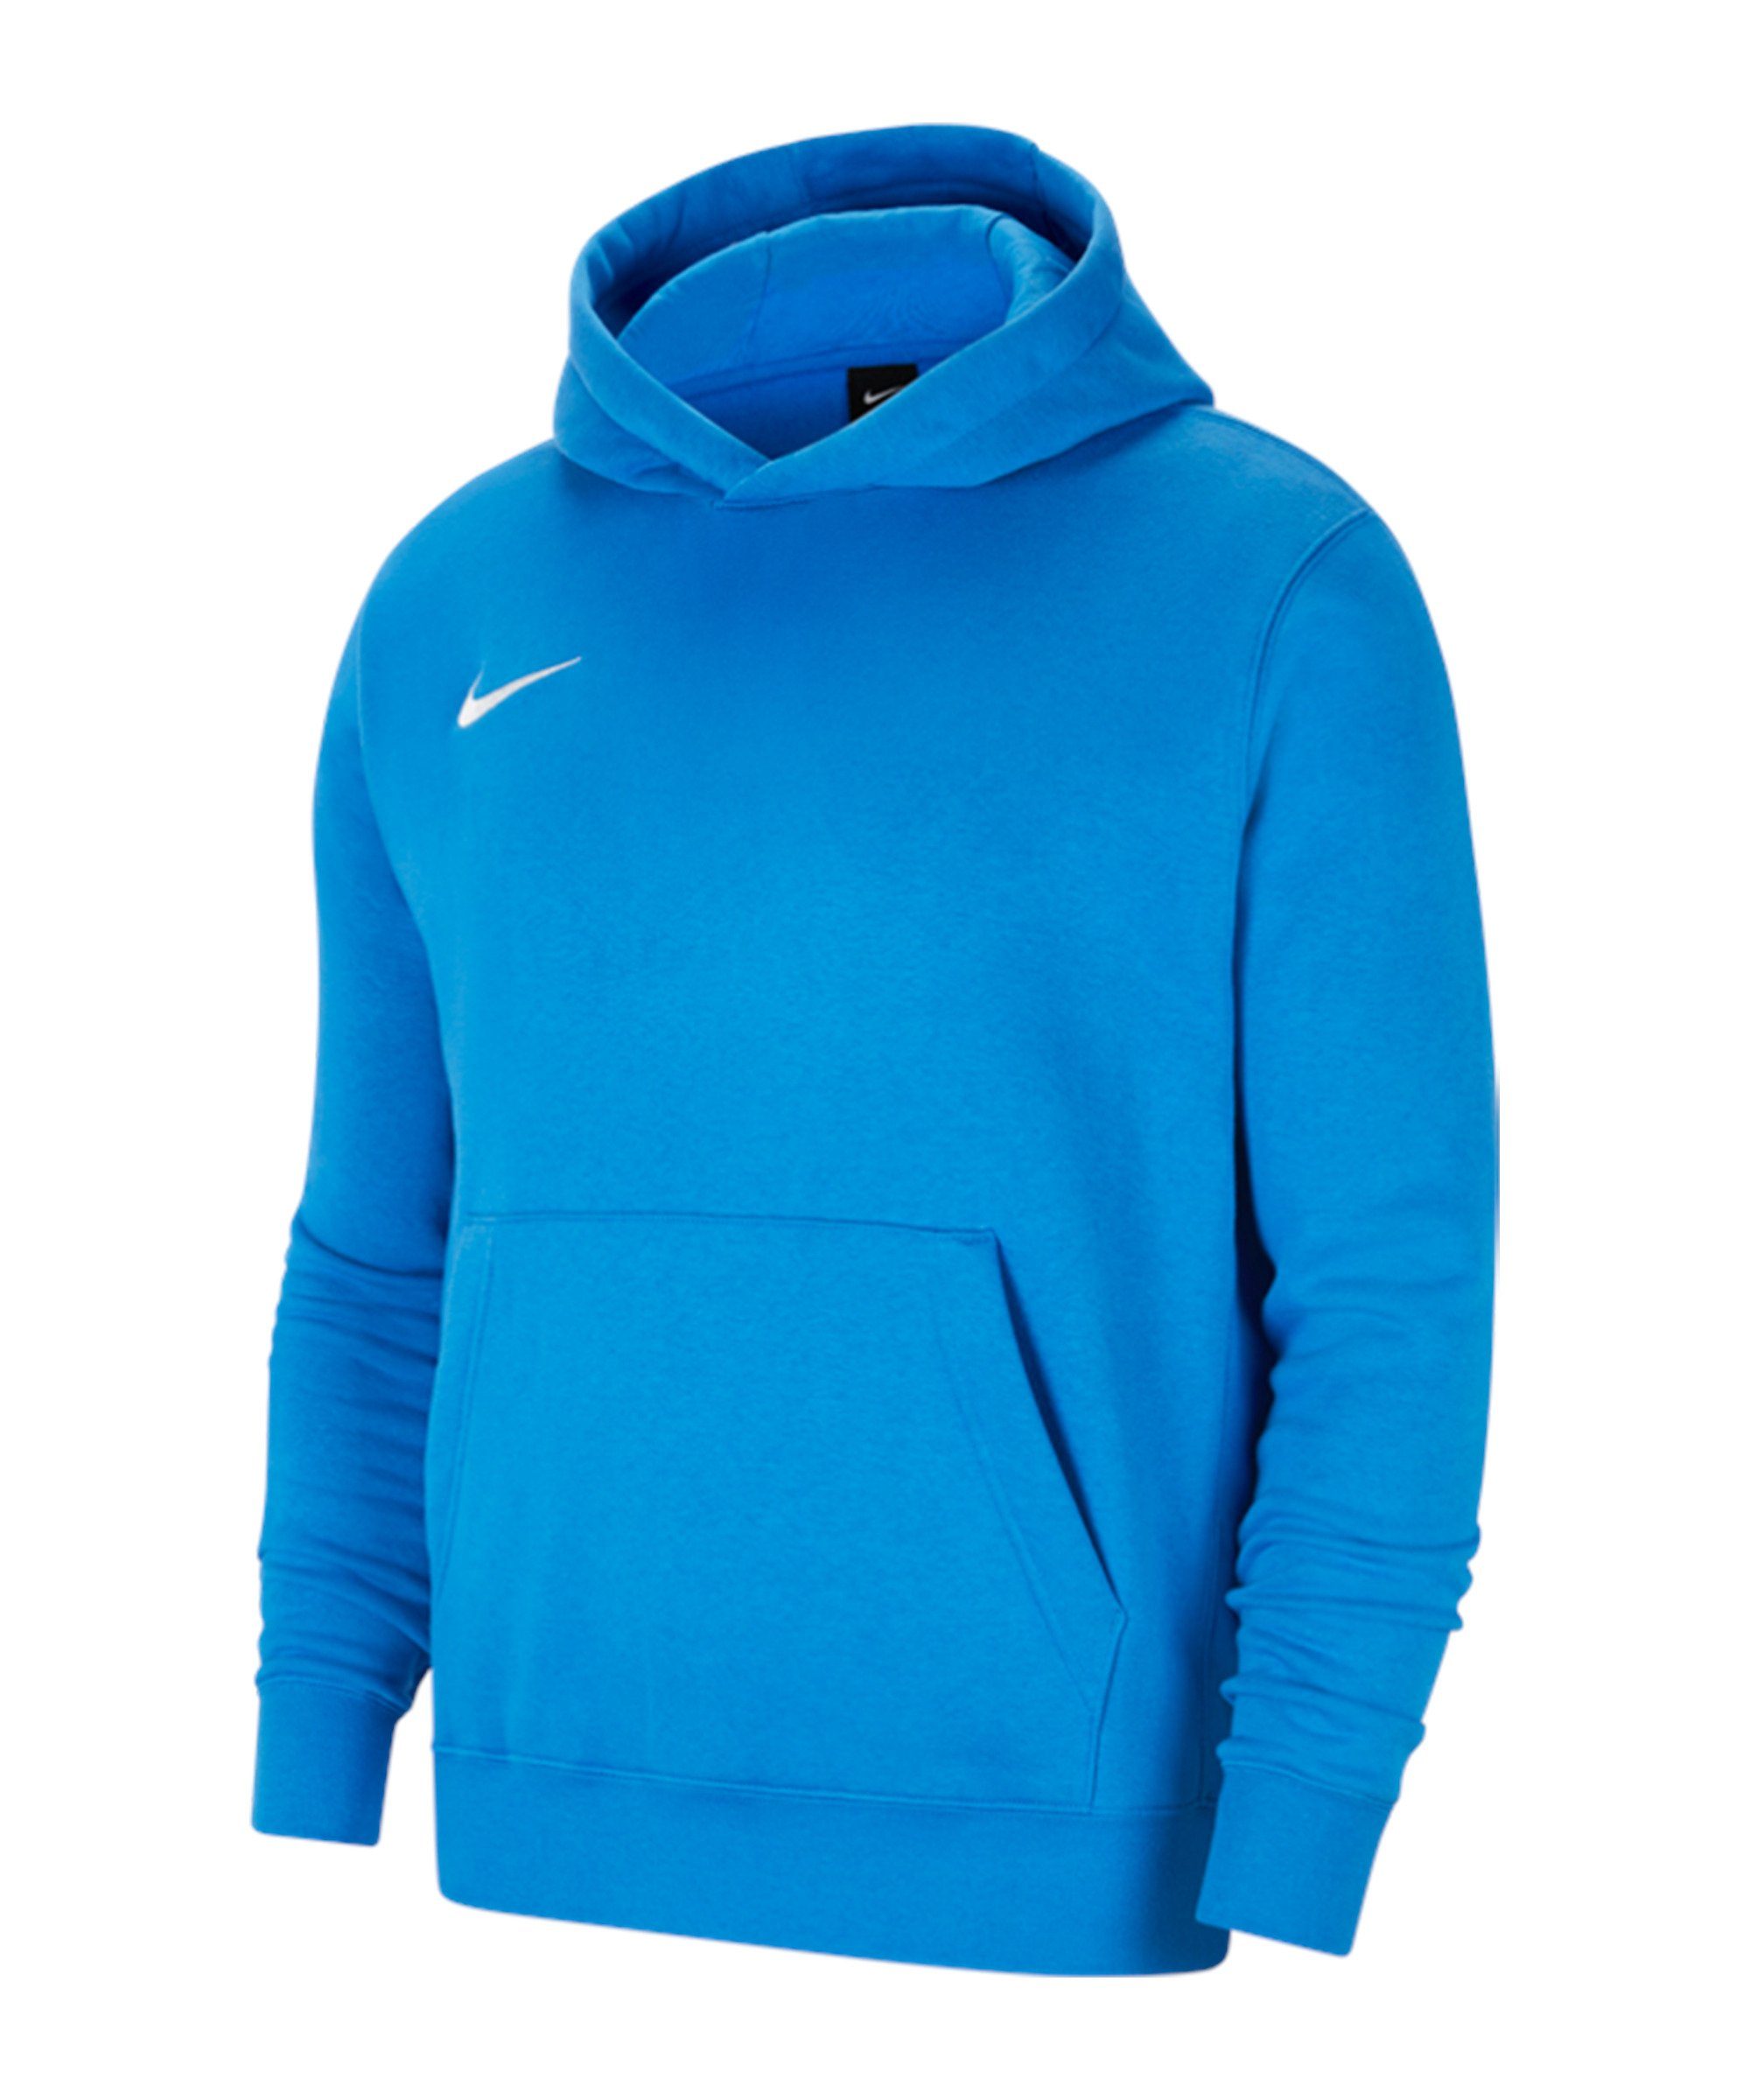 Hoody 20 Fleece Kids Sweatshirt Nike Park blauweiss